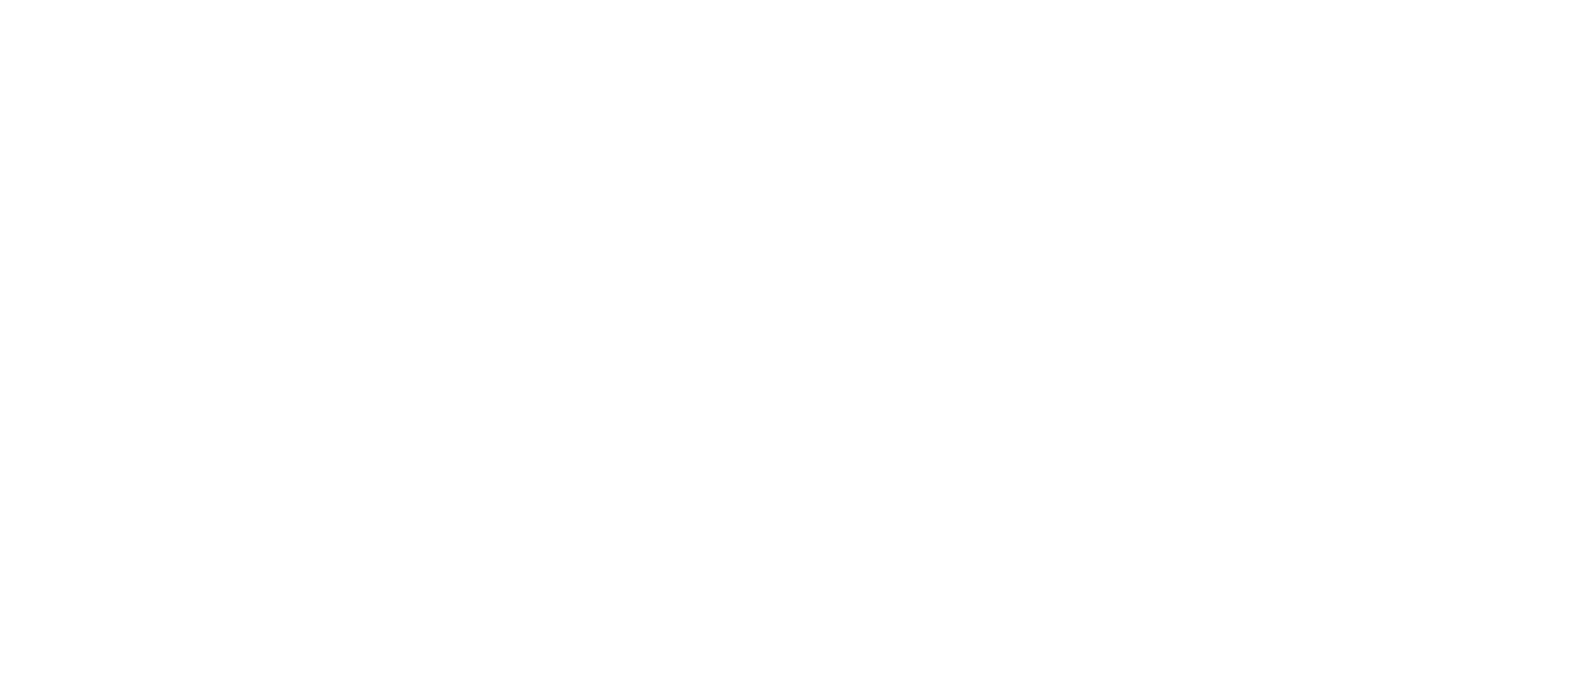 PBBank (Public Bank Bhd) logo large for dark backgrounds (transparent PNG)